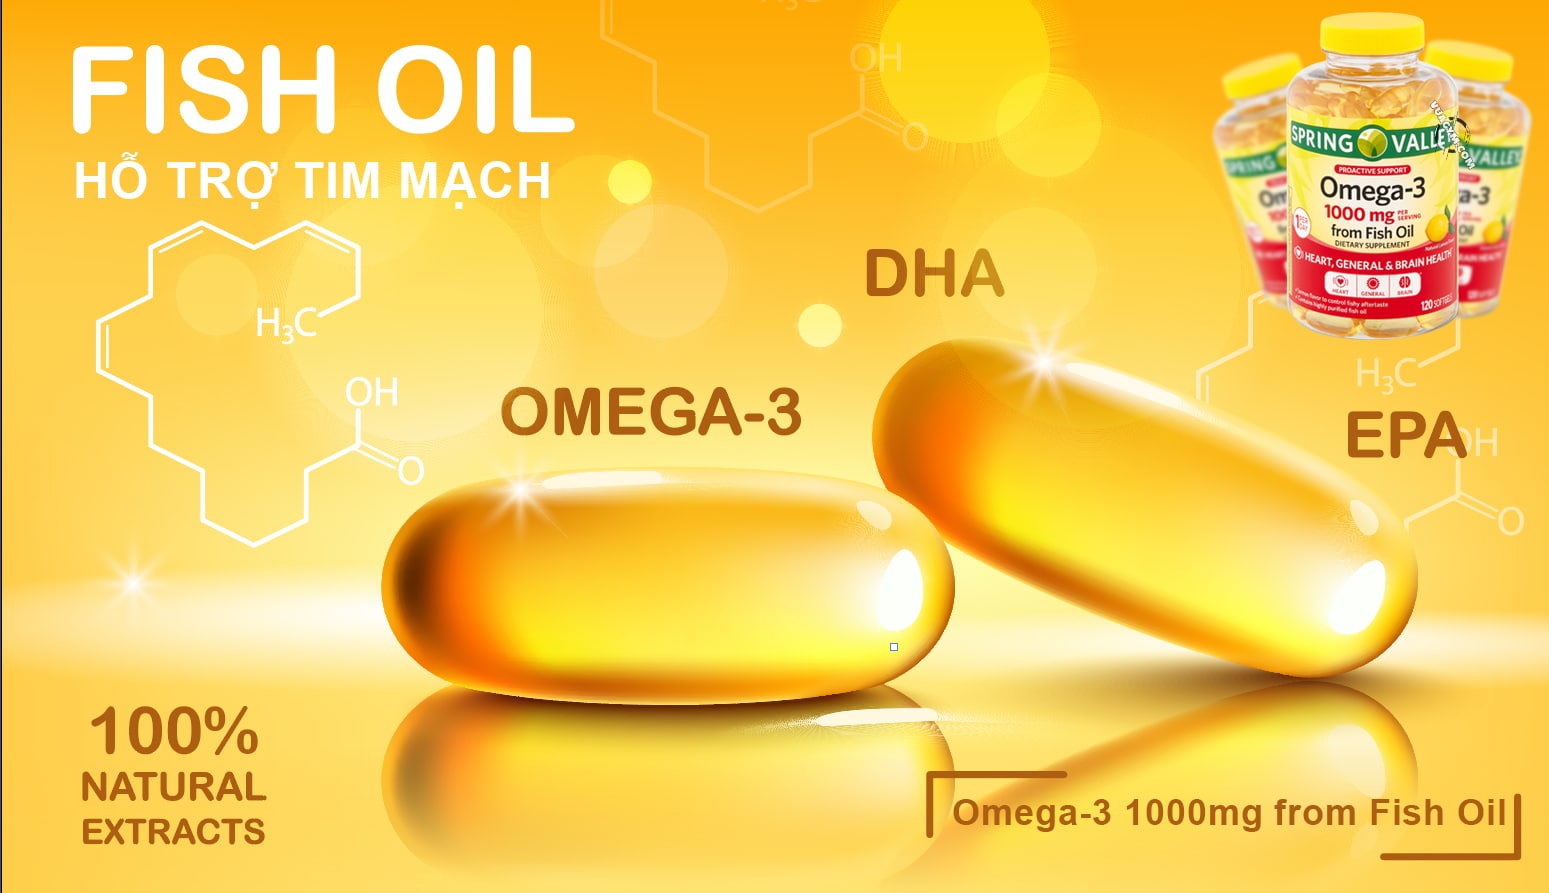 Spring Valley - Omega-3 1000mg from Fish Oil (120 viên) - omega 3 sring